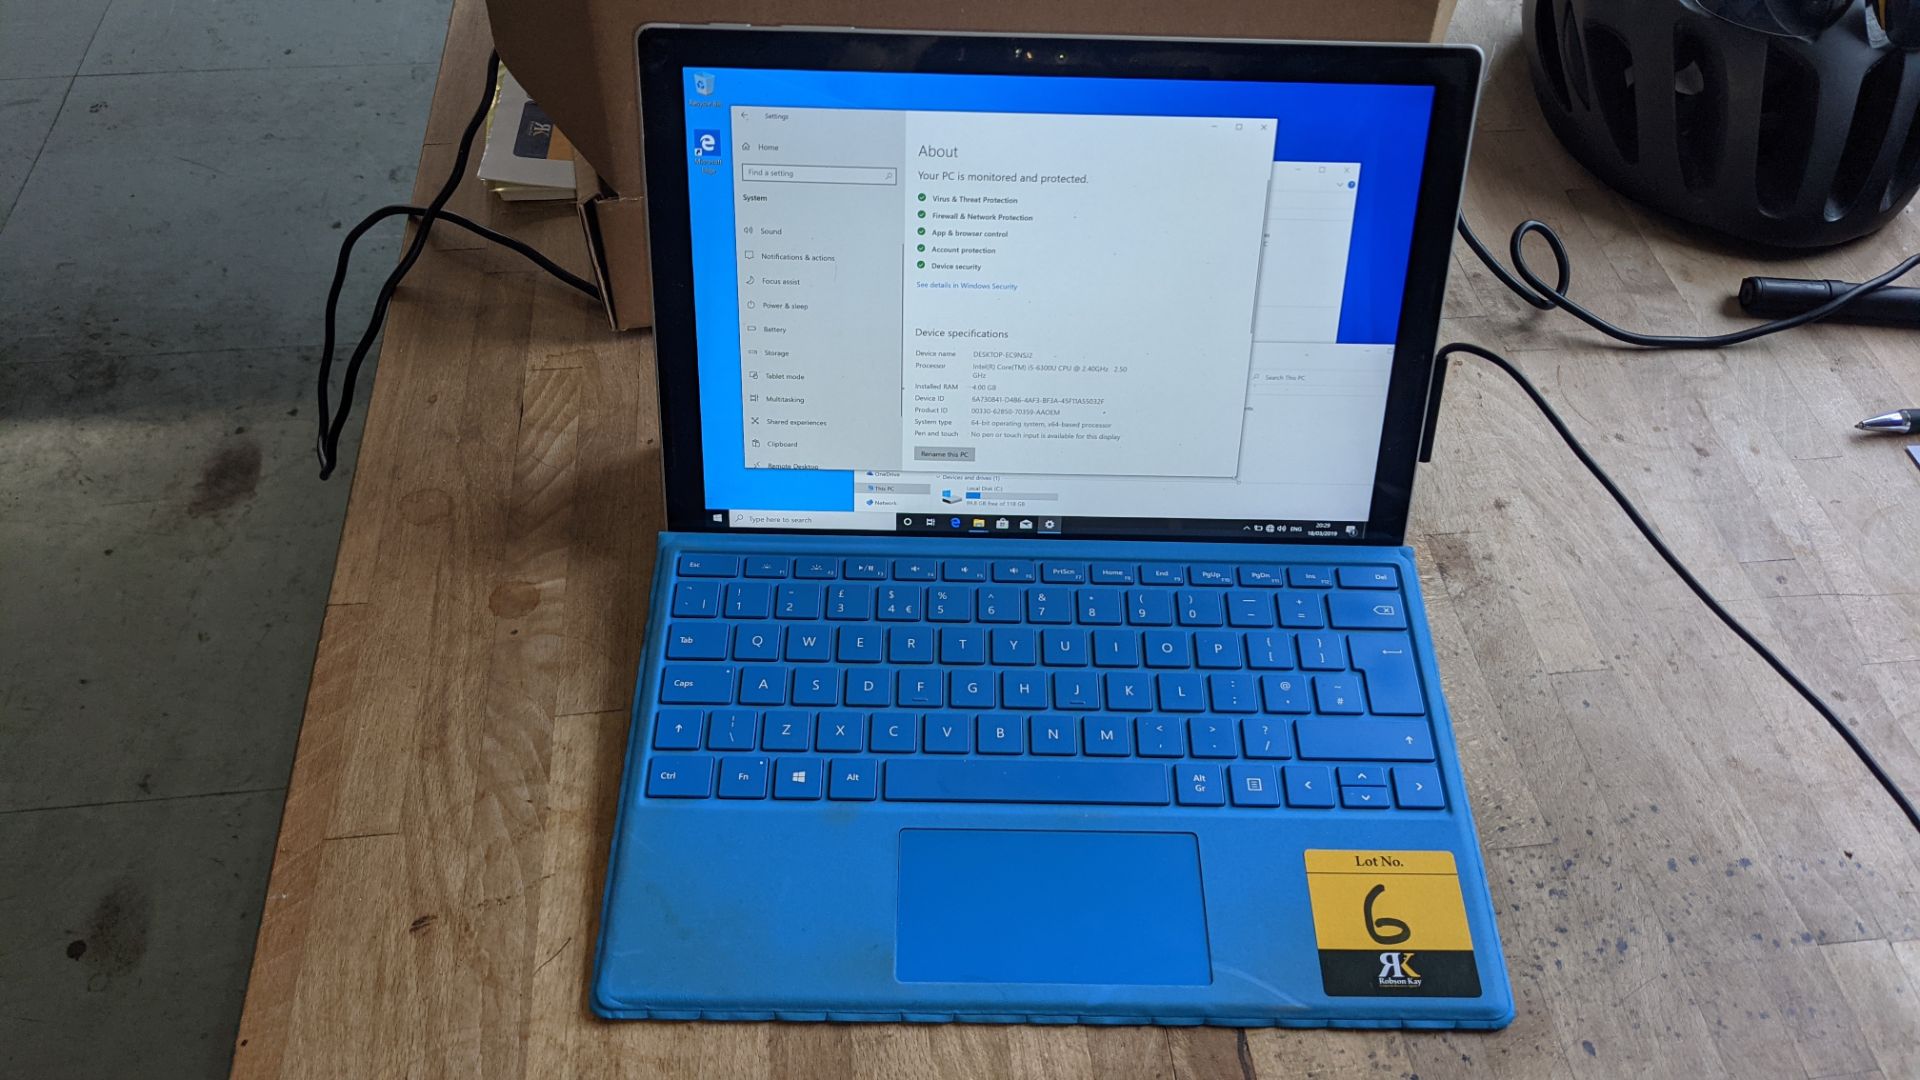 Microsoft Surface Pro 4 notebook computer, Intel Core i5-6300u@2.4GHz, 4Gb RAM, 128Gb SSD, with brig